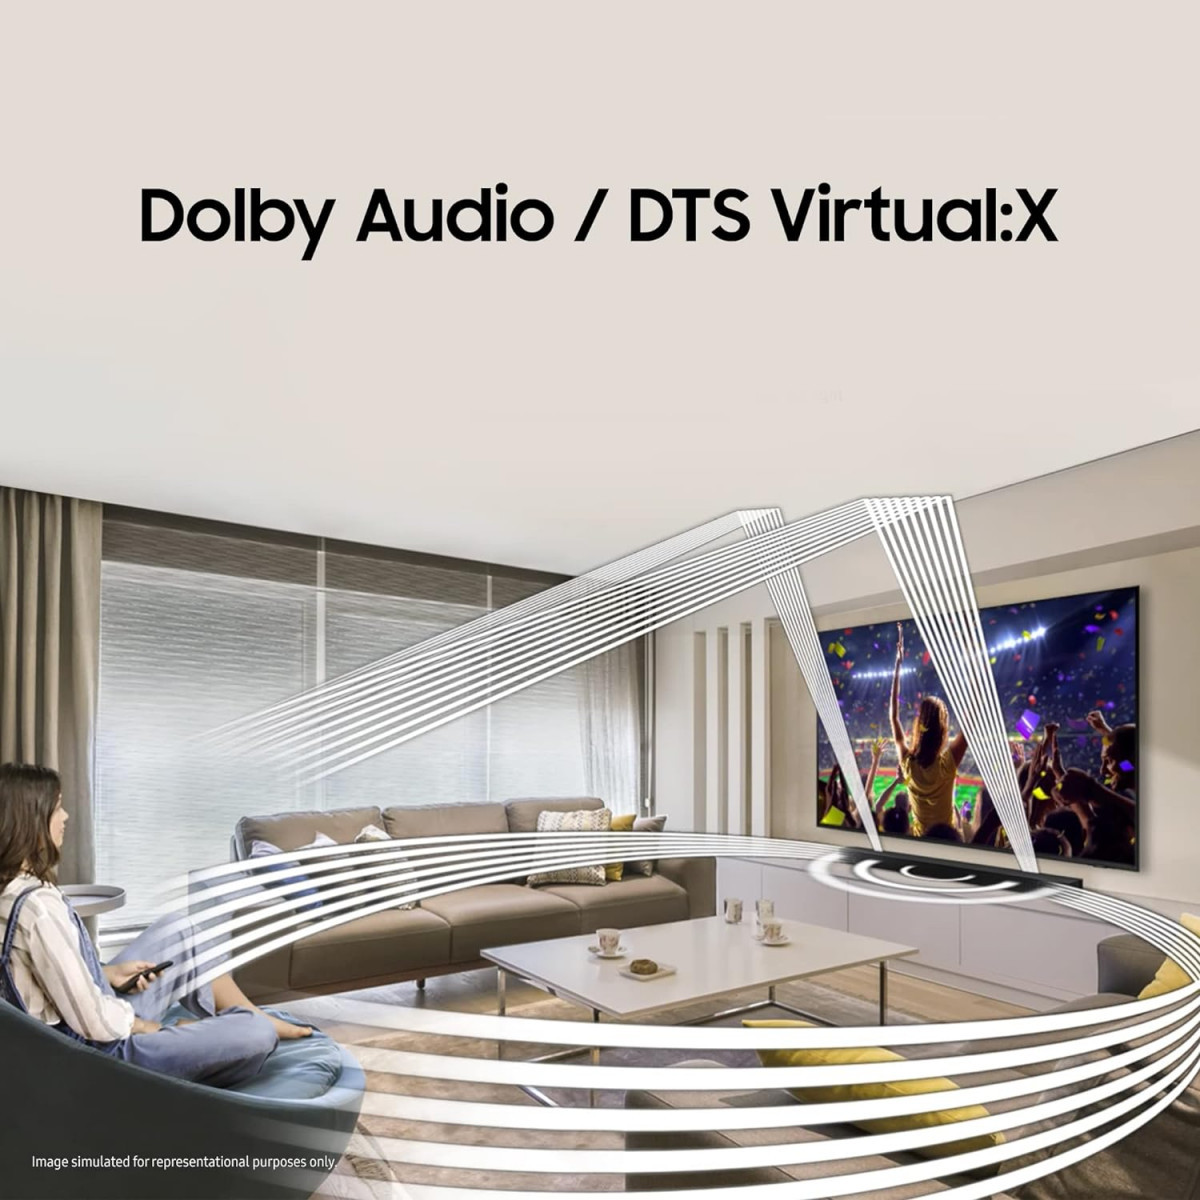 Samsung Soundbar HW-B55EXL 21 Channel Wireless Subwoofer Dolby 2ch  DTS Virtual X Experience Sound AI Adaptive Sound Lite Energy Star Black